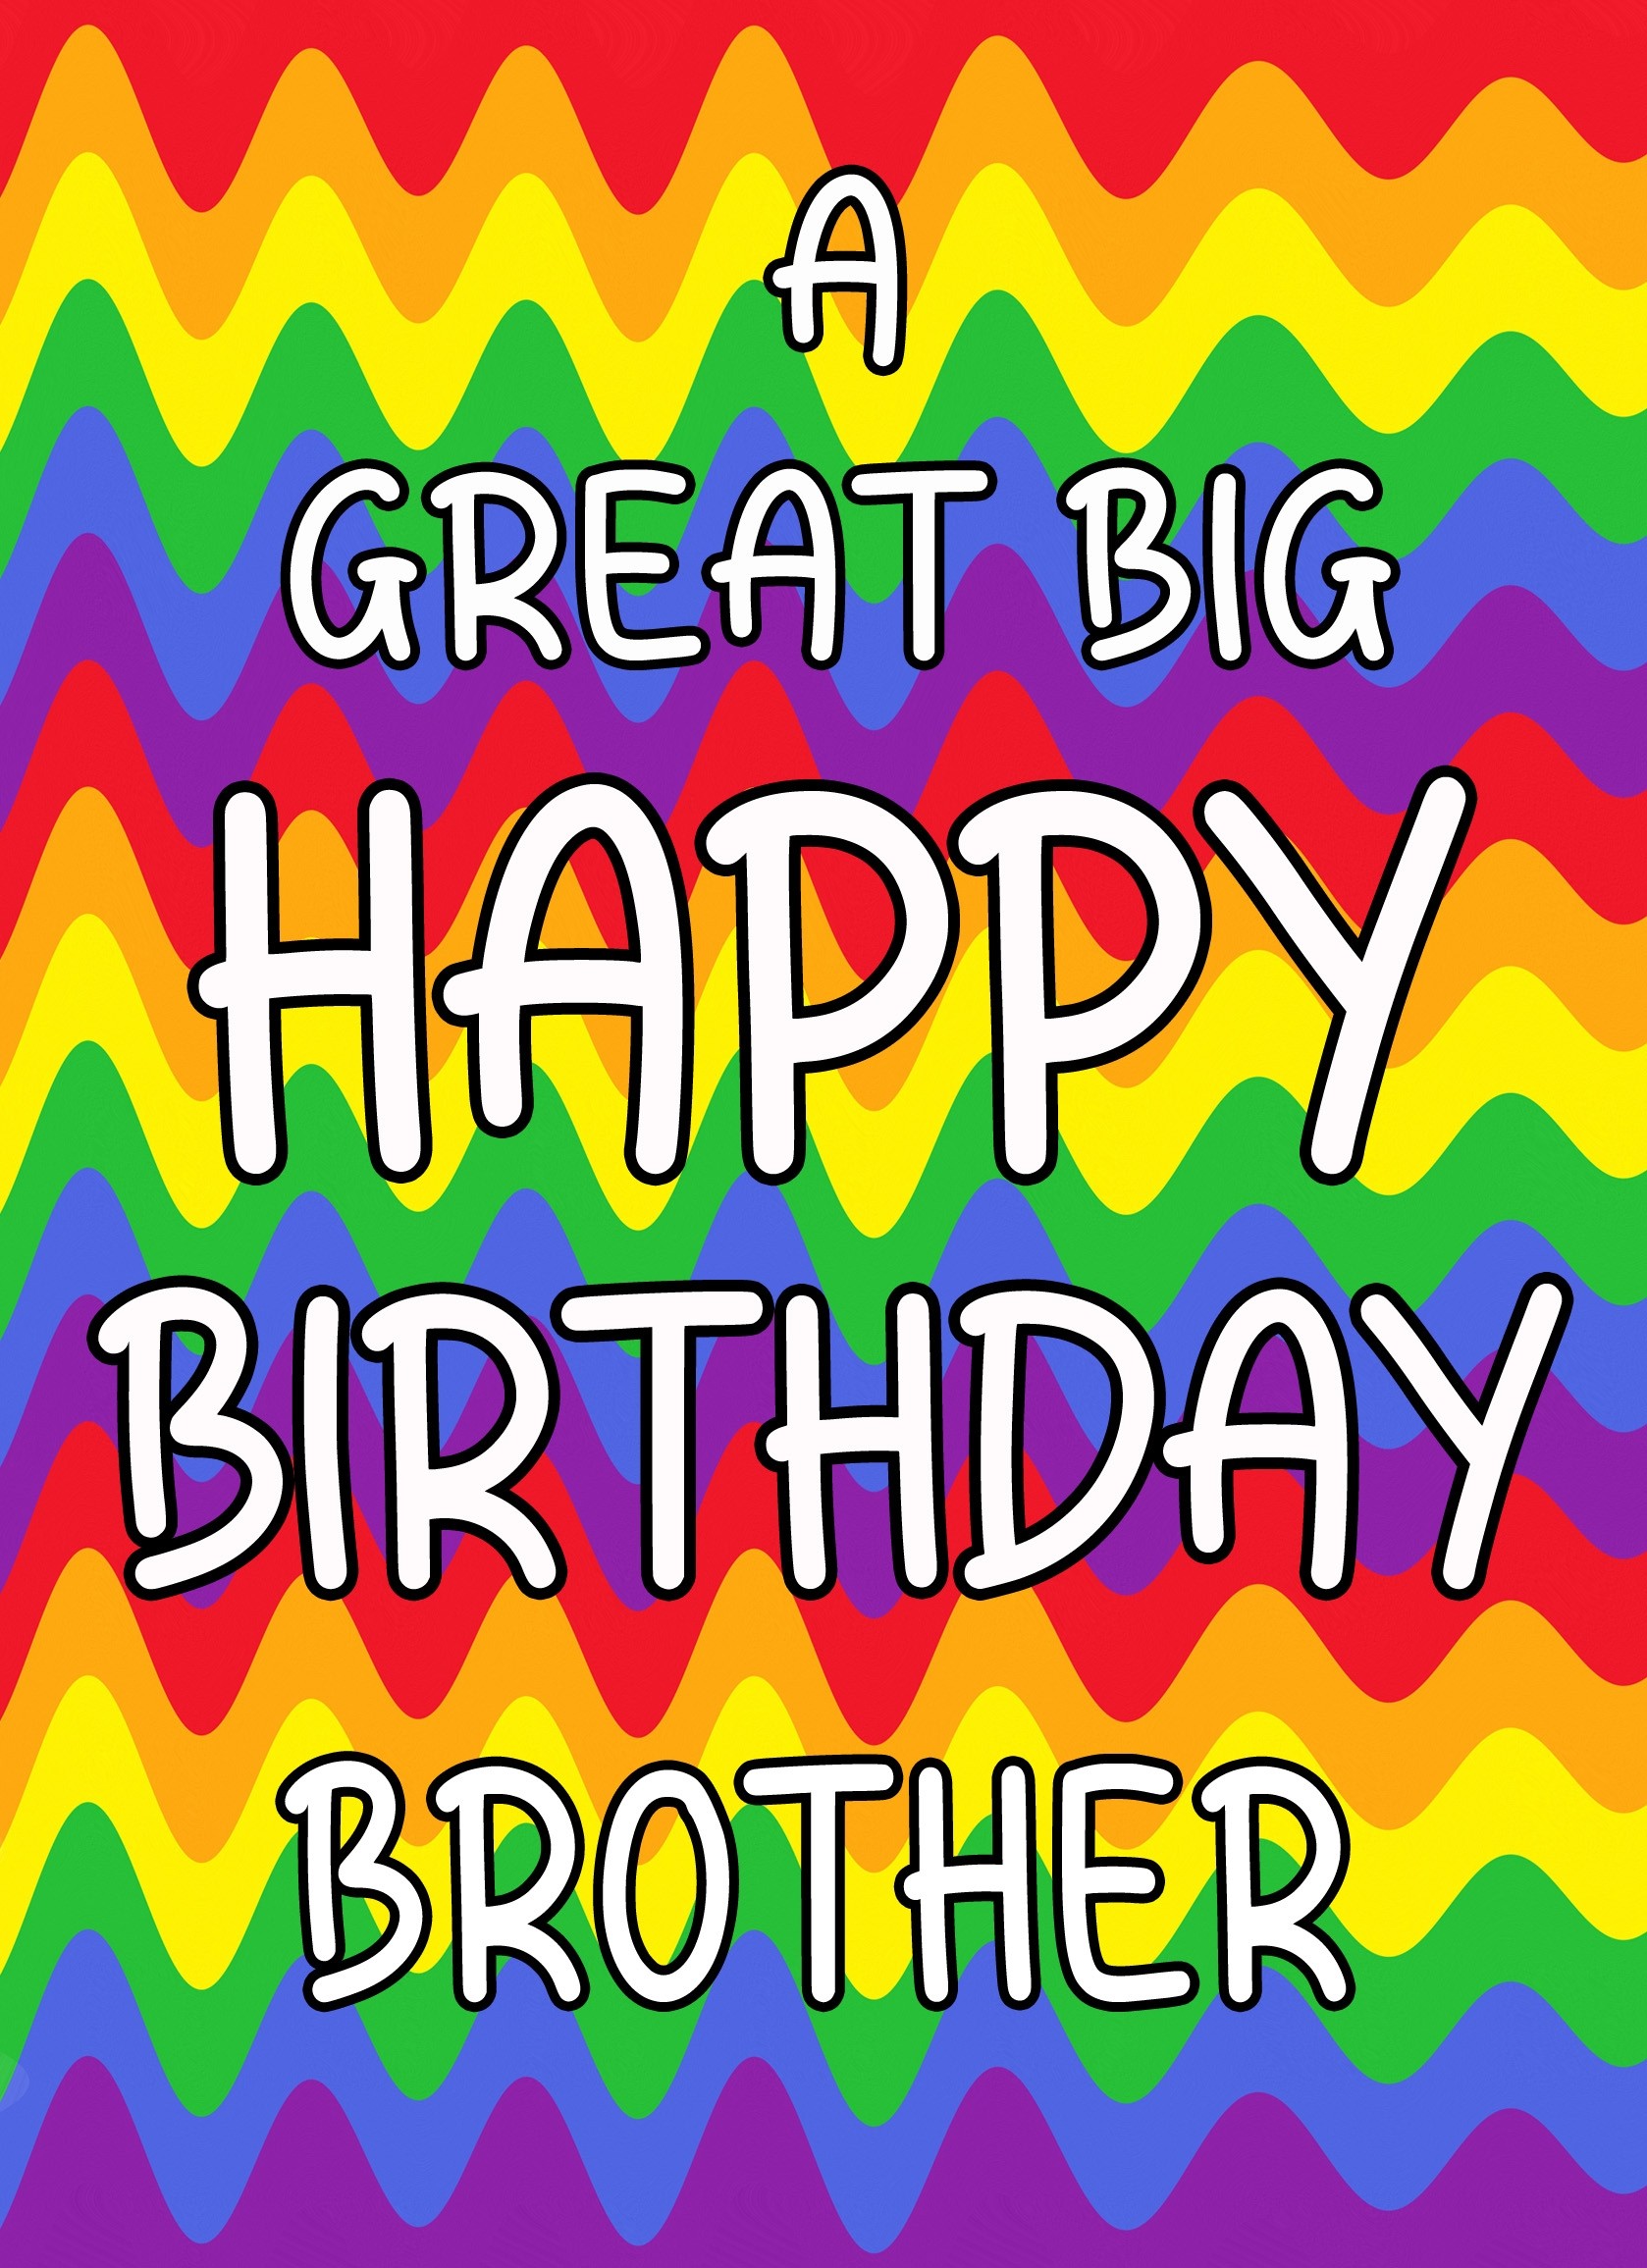 Happy Birthday 'Brother' Greeting Card (Rainbow)